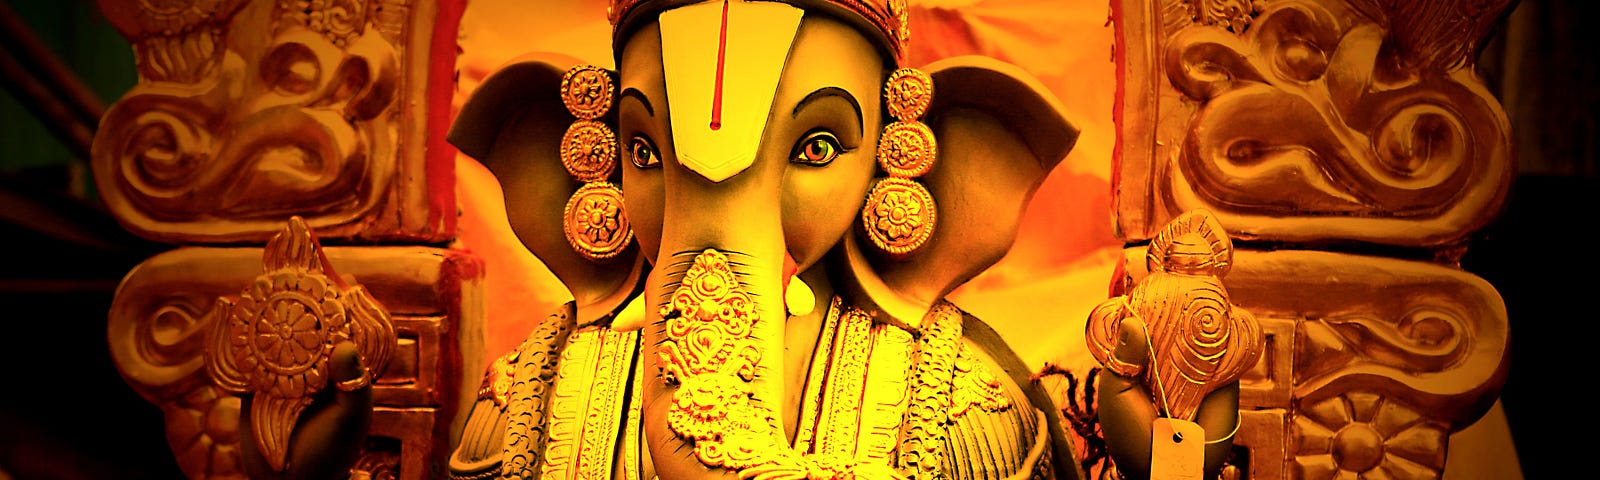 A photo of Hindu God Lord Ganesha